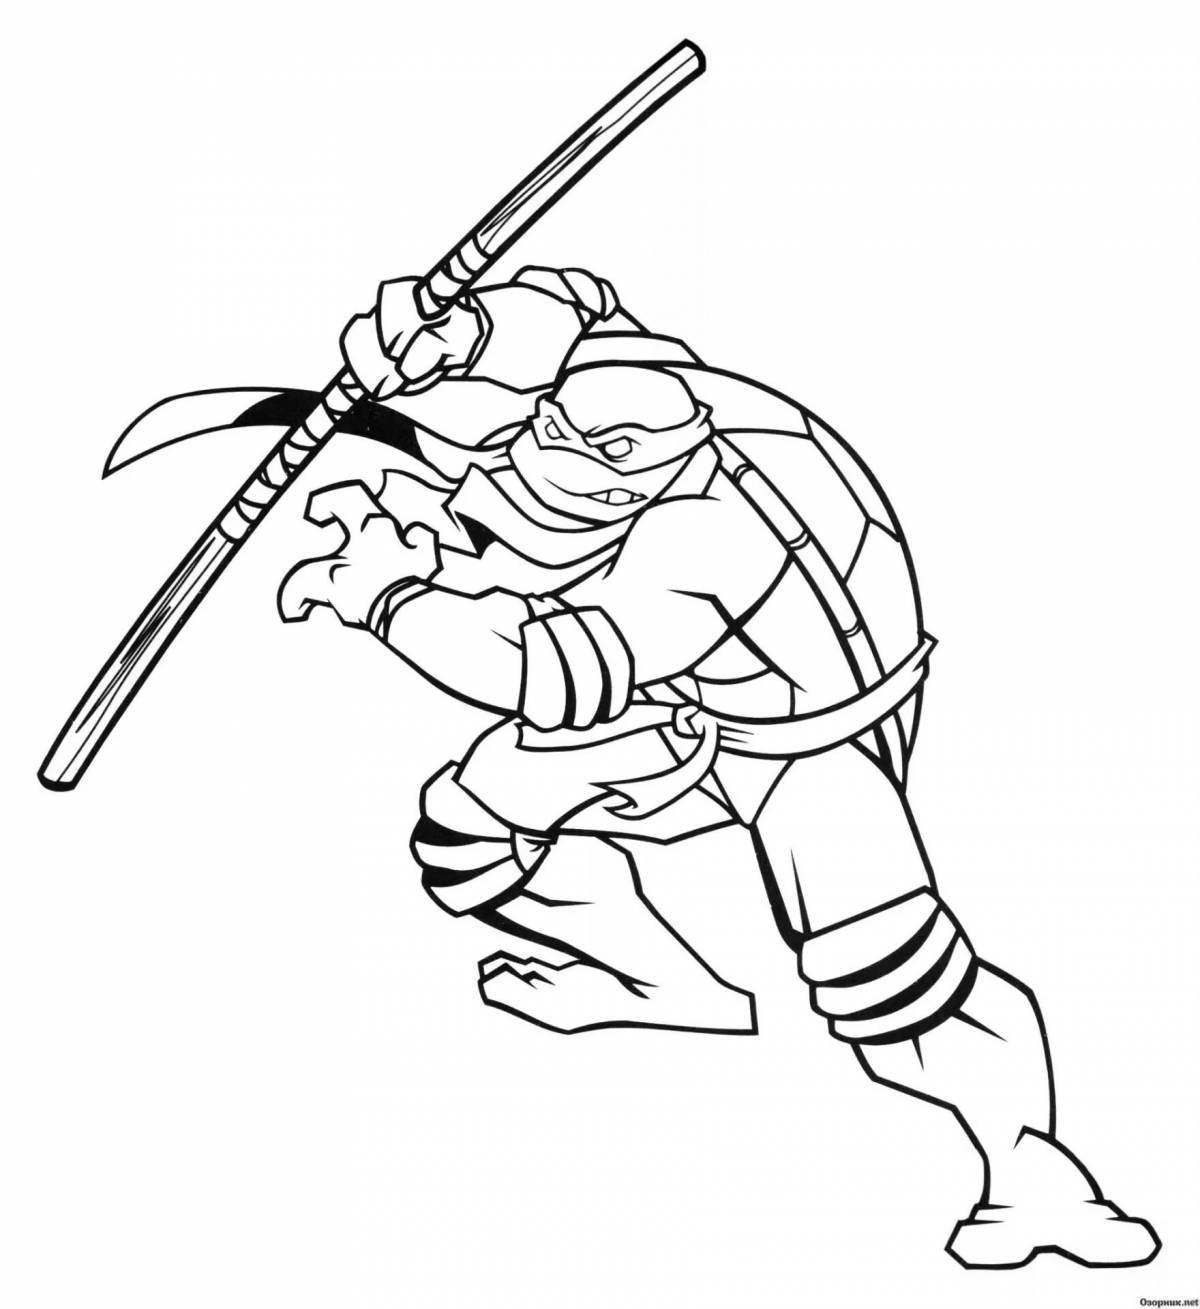 Glitter Teenage Mutant Ninja Turtles donatello coloring book